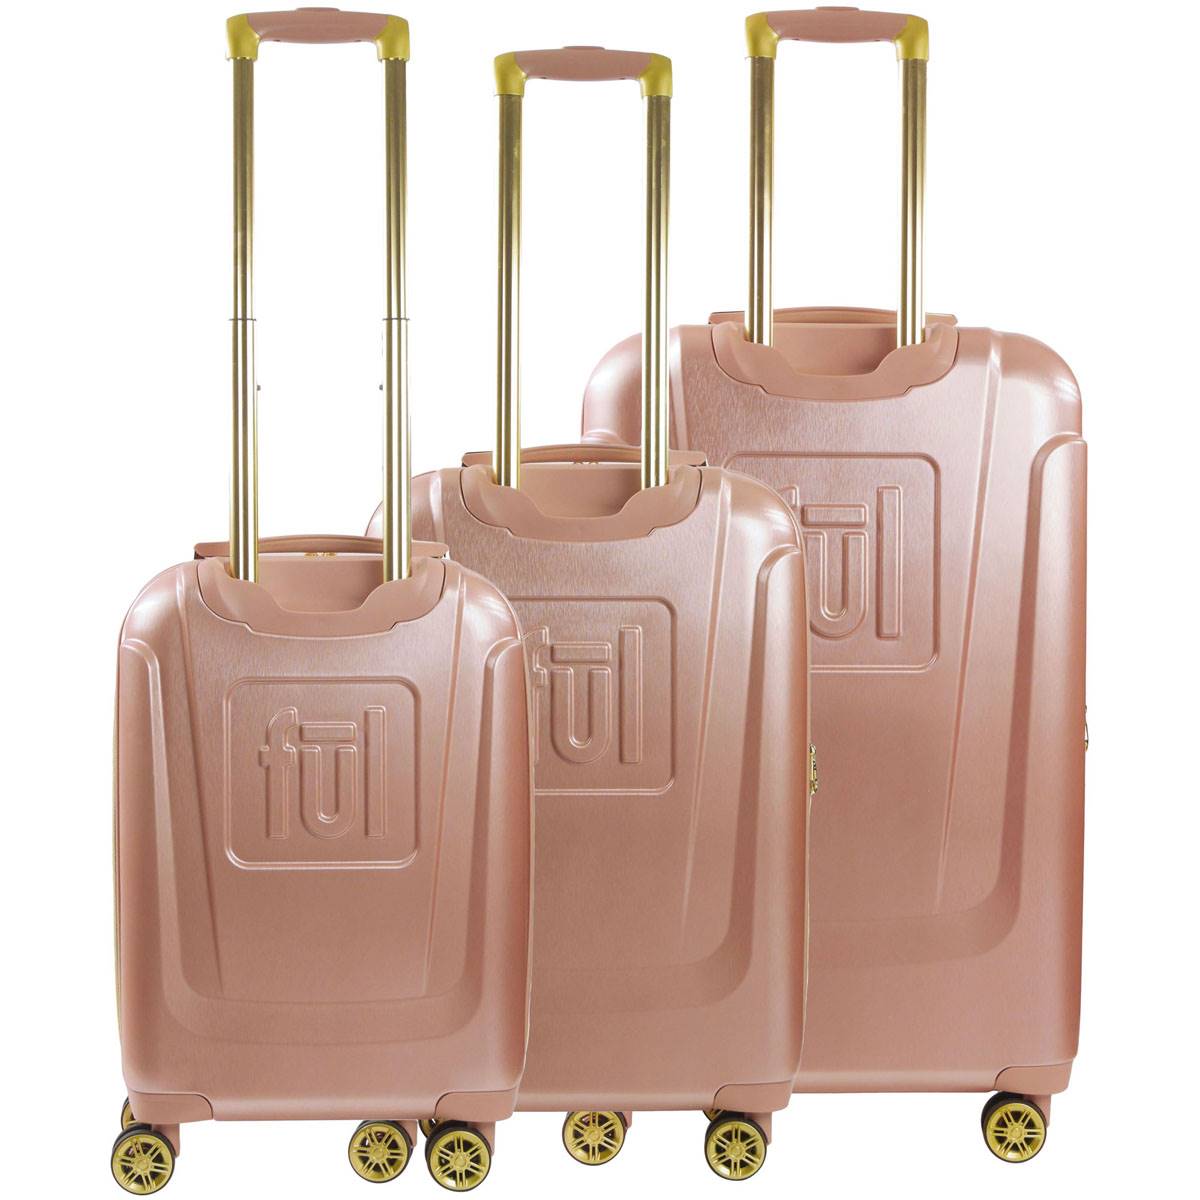 FUL Disney 3pc. Mickey Mouse Hard-Sided Luggage Set